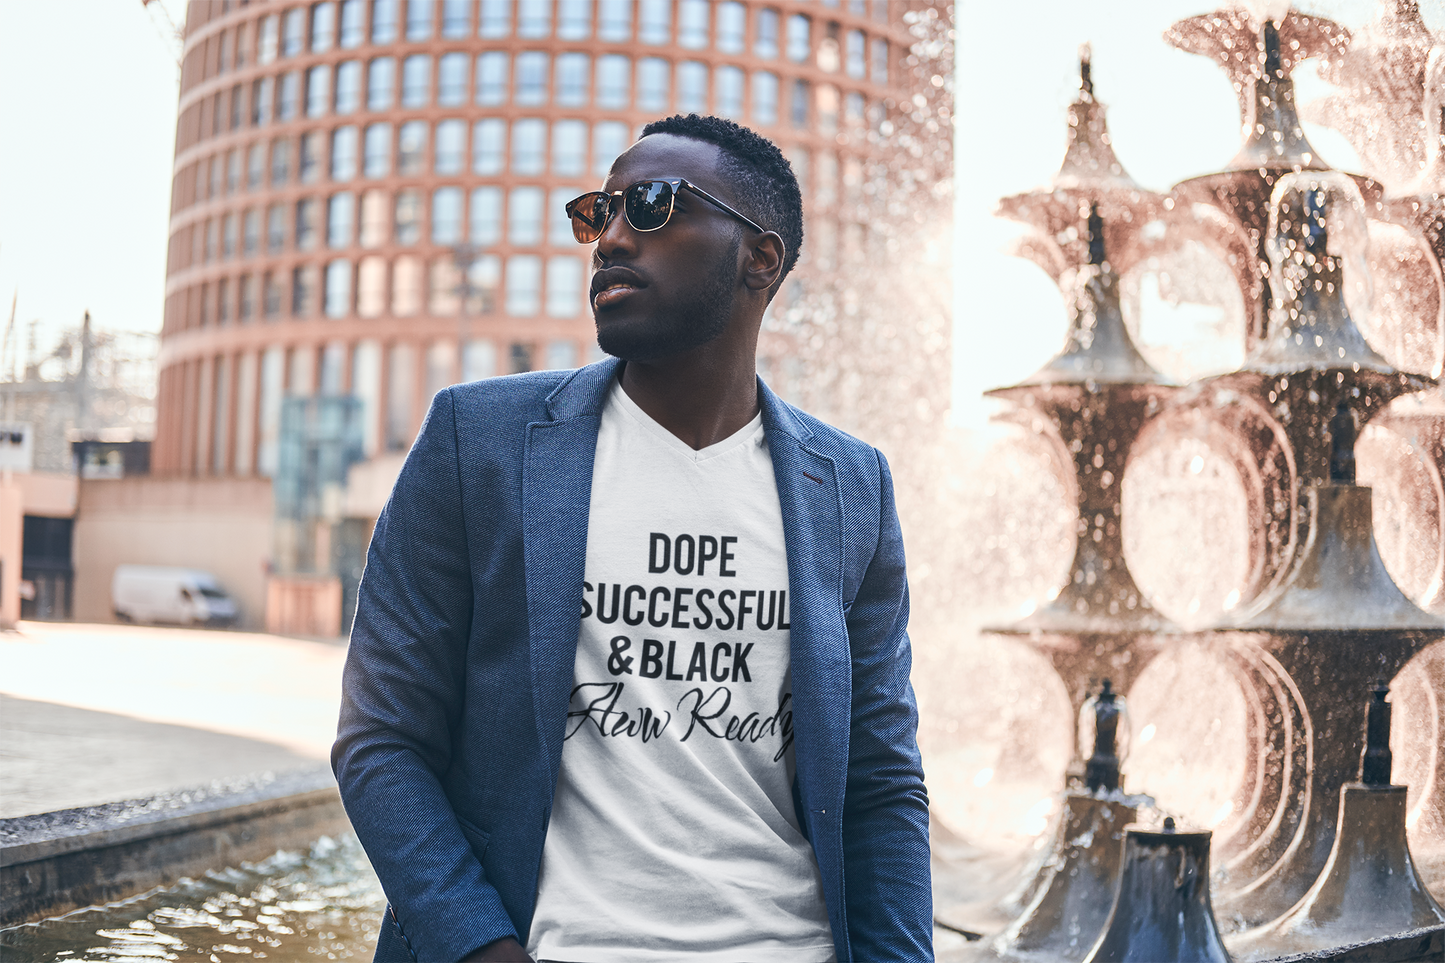 "Dope Successful & BLACK" Tee